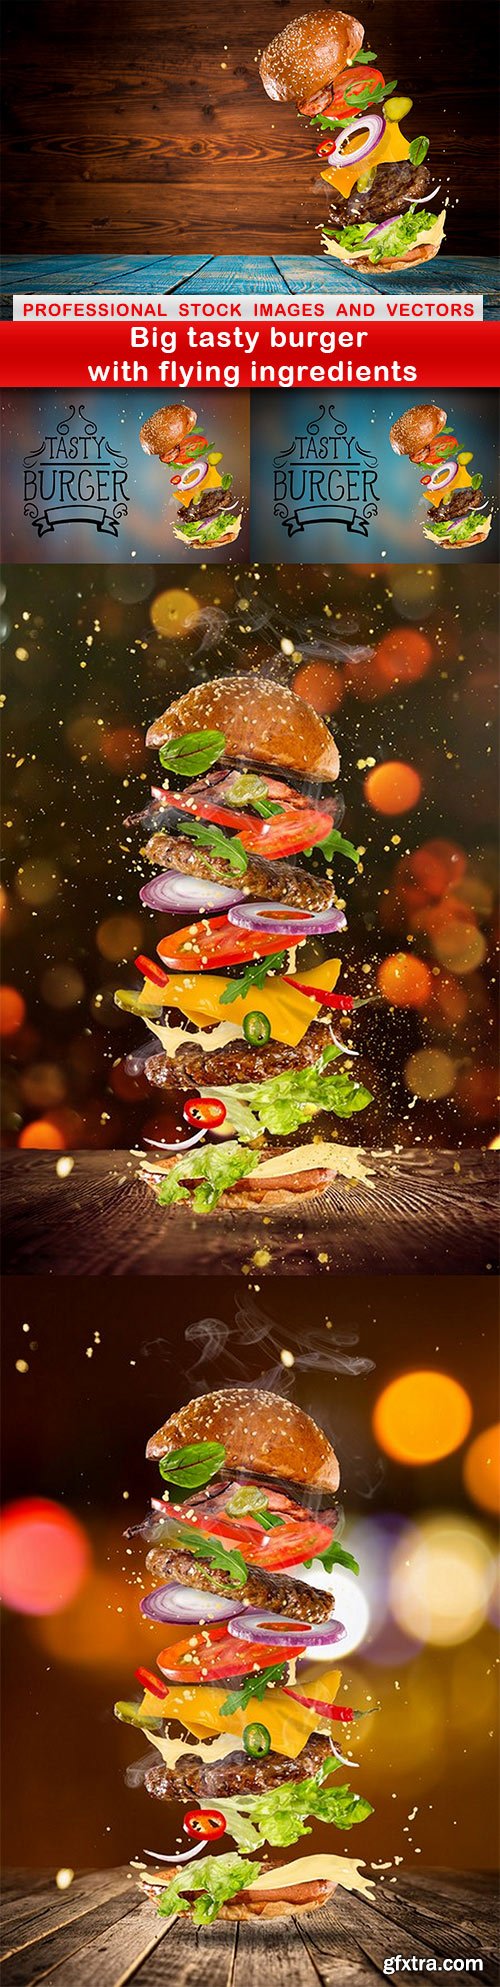 Big tasty burger with flying ingredients - 5 UHQ JPEG